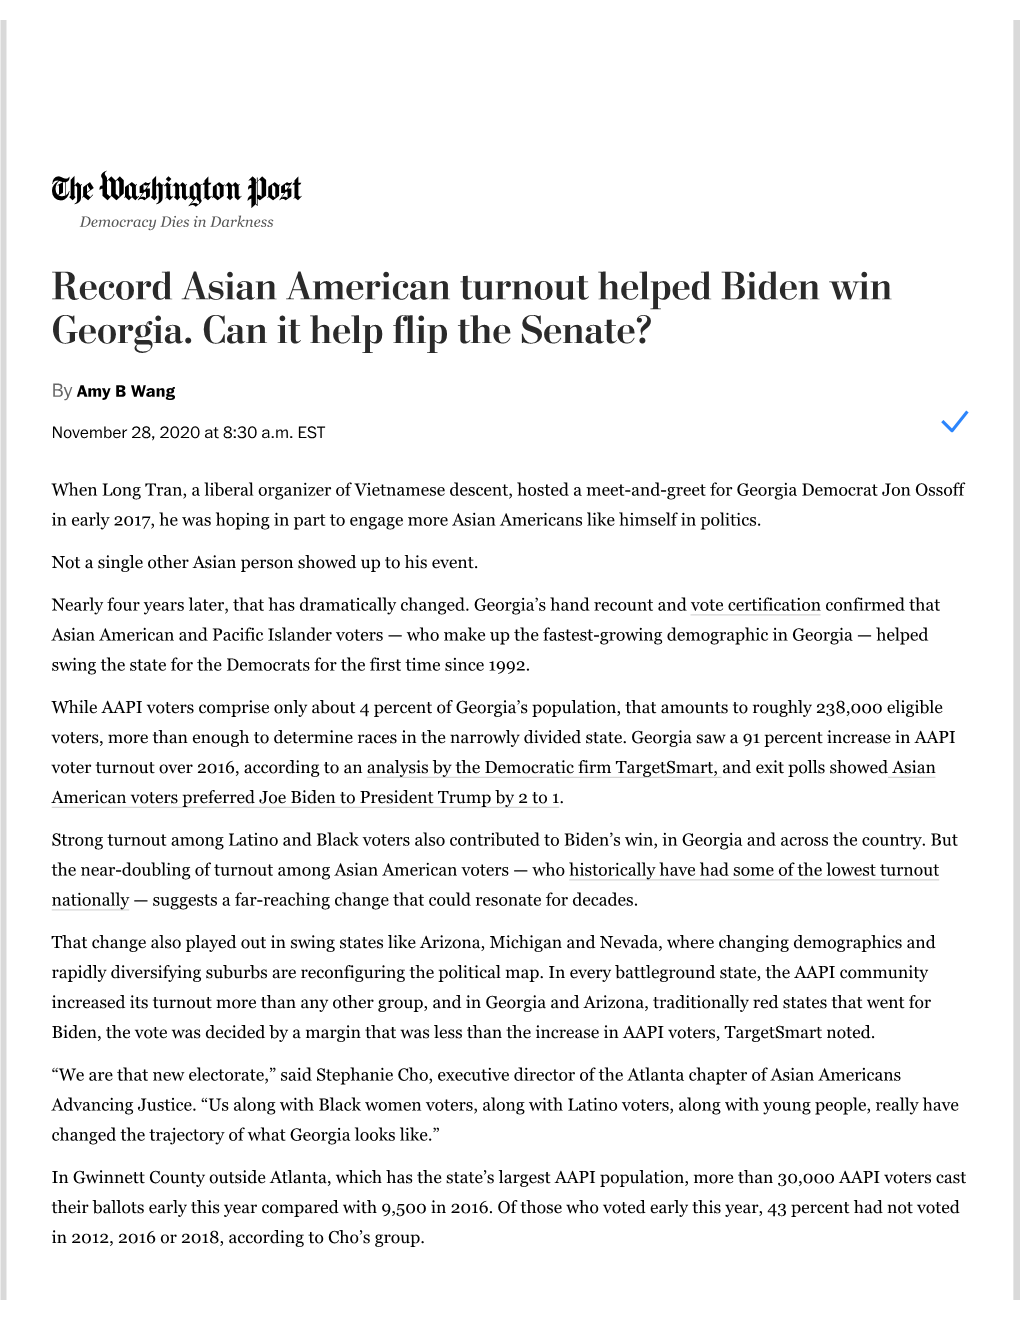 Record Asian American Turnout Helped Biden Win Georgia. Can It Help Flip the Senate?